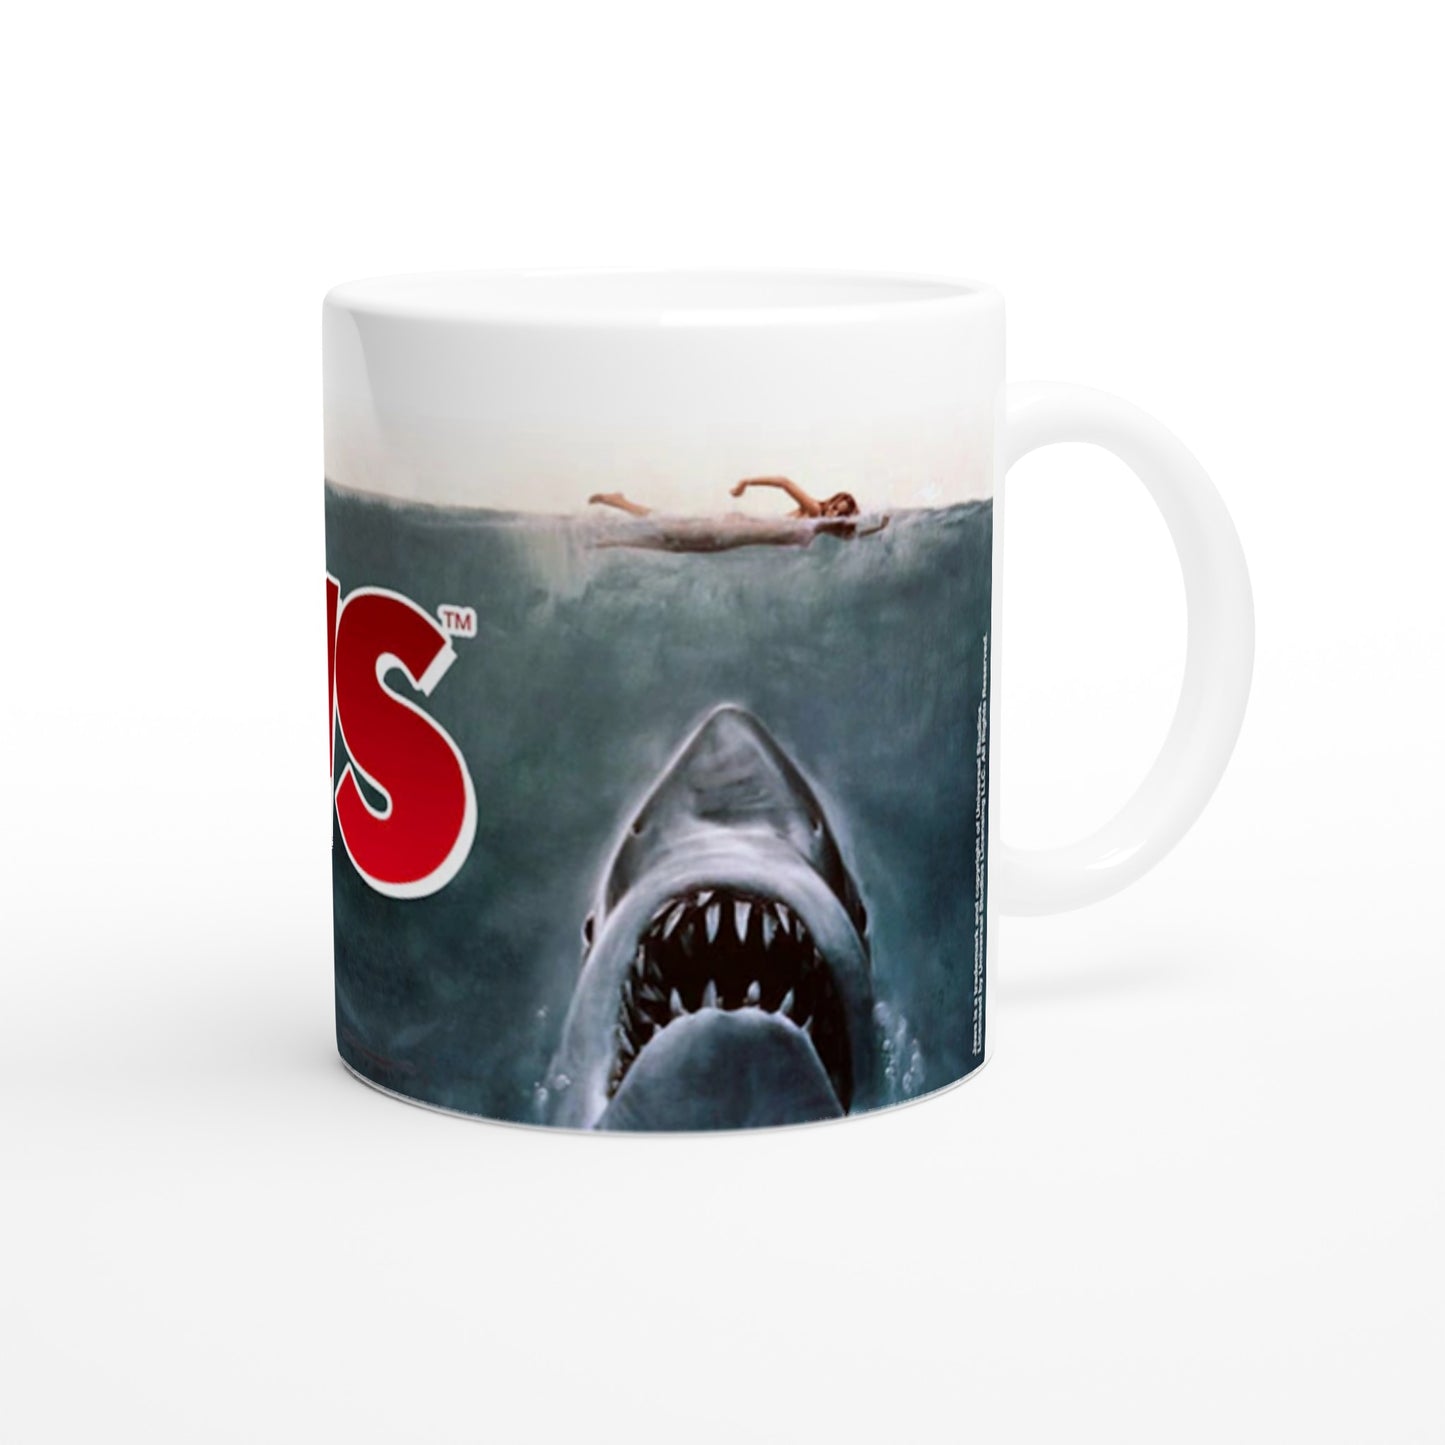 Official JAWS Mug - Jaws Surfer - 330ml White Mug